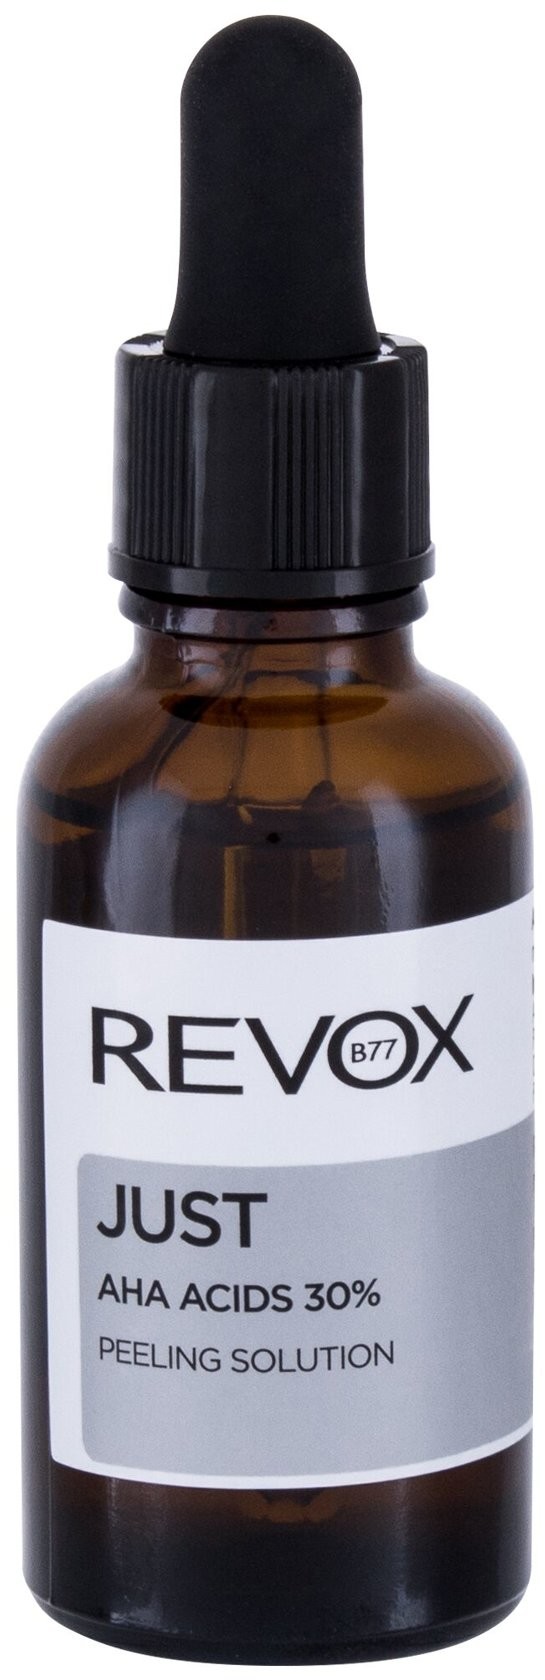 Revox Revox Just Peeling Solution AHA ACIDS 30% 30 ml Peeling